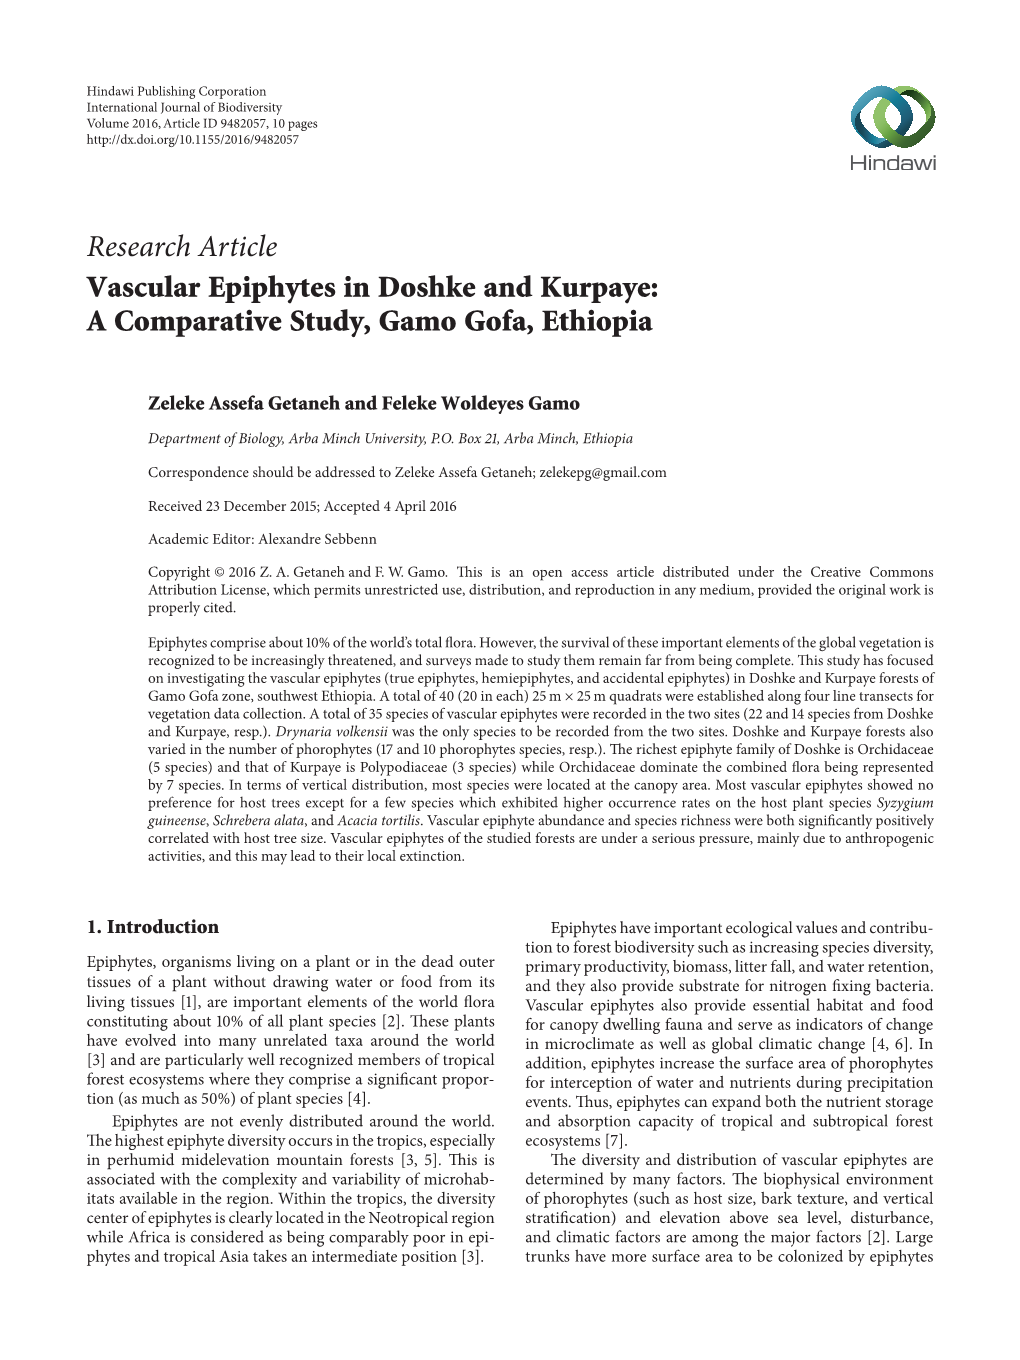 Vascular Epiphytes in Doshke and Kurpaye: a Comparative Study, Gamo Gofa, Ethiopia